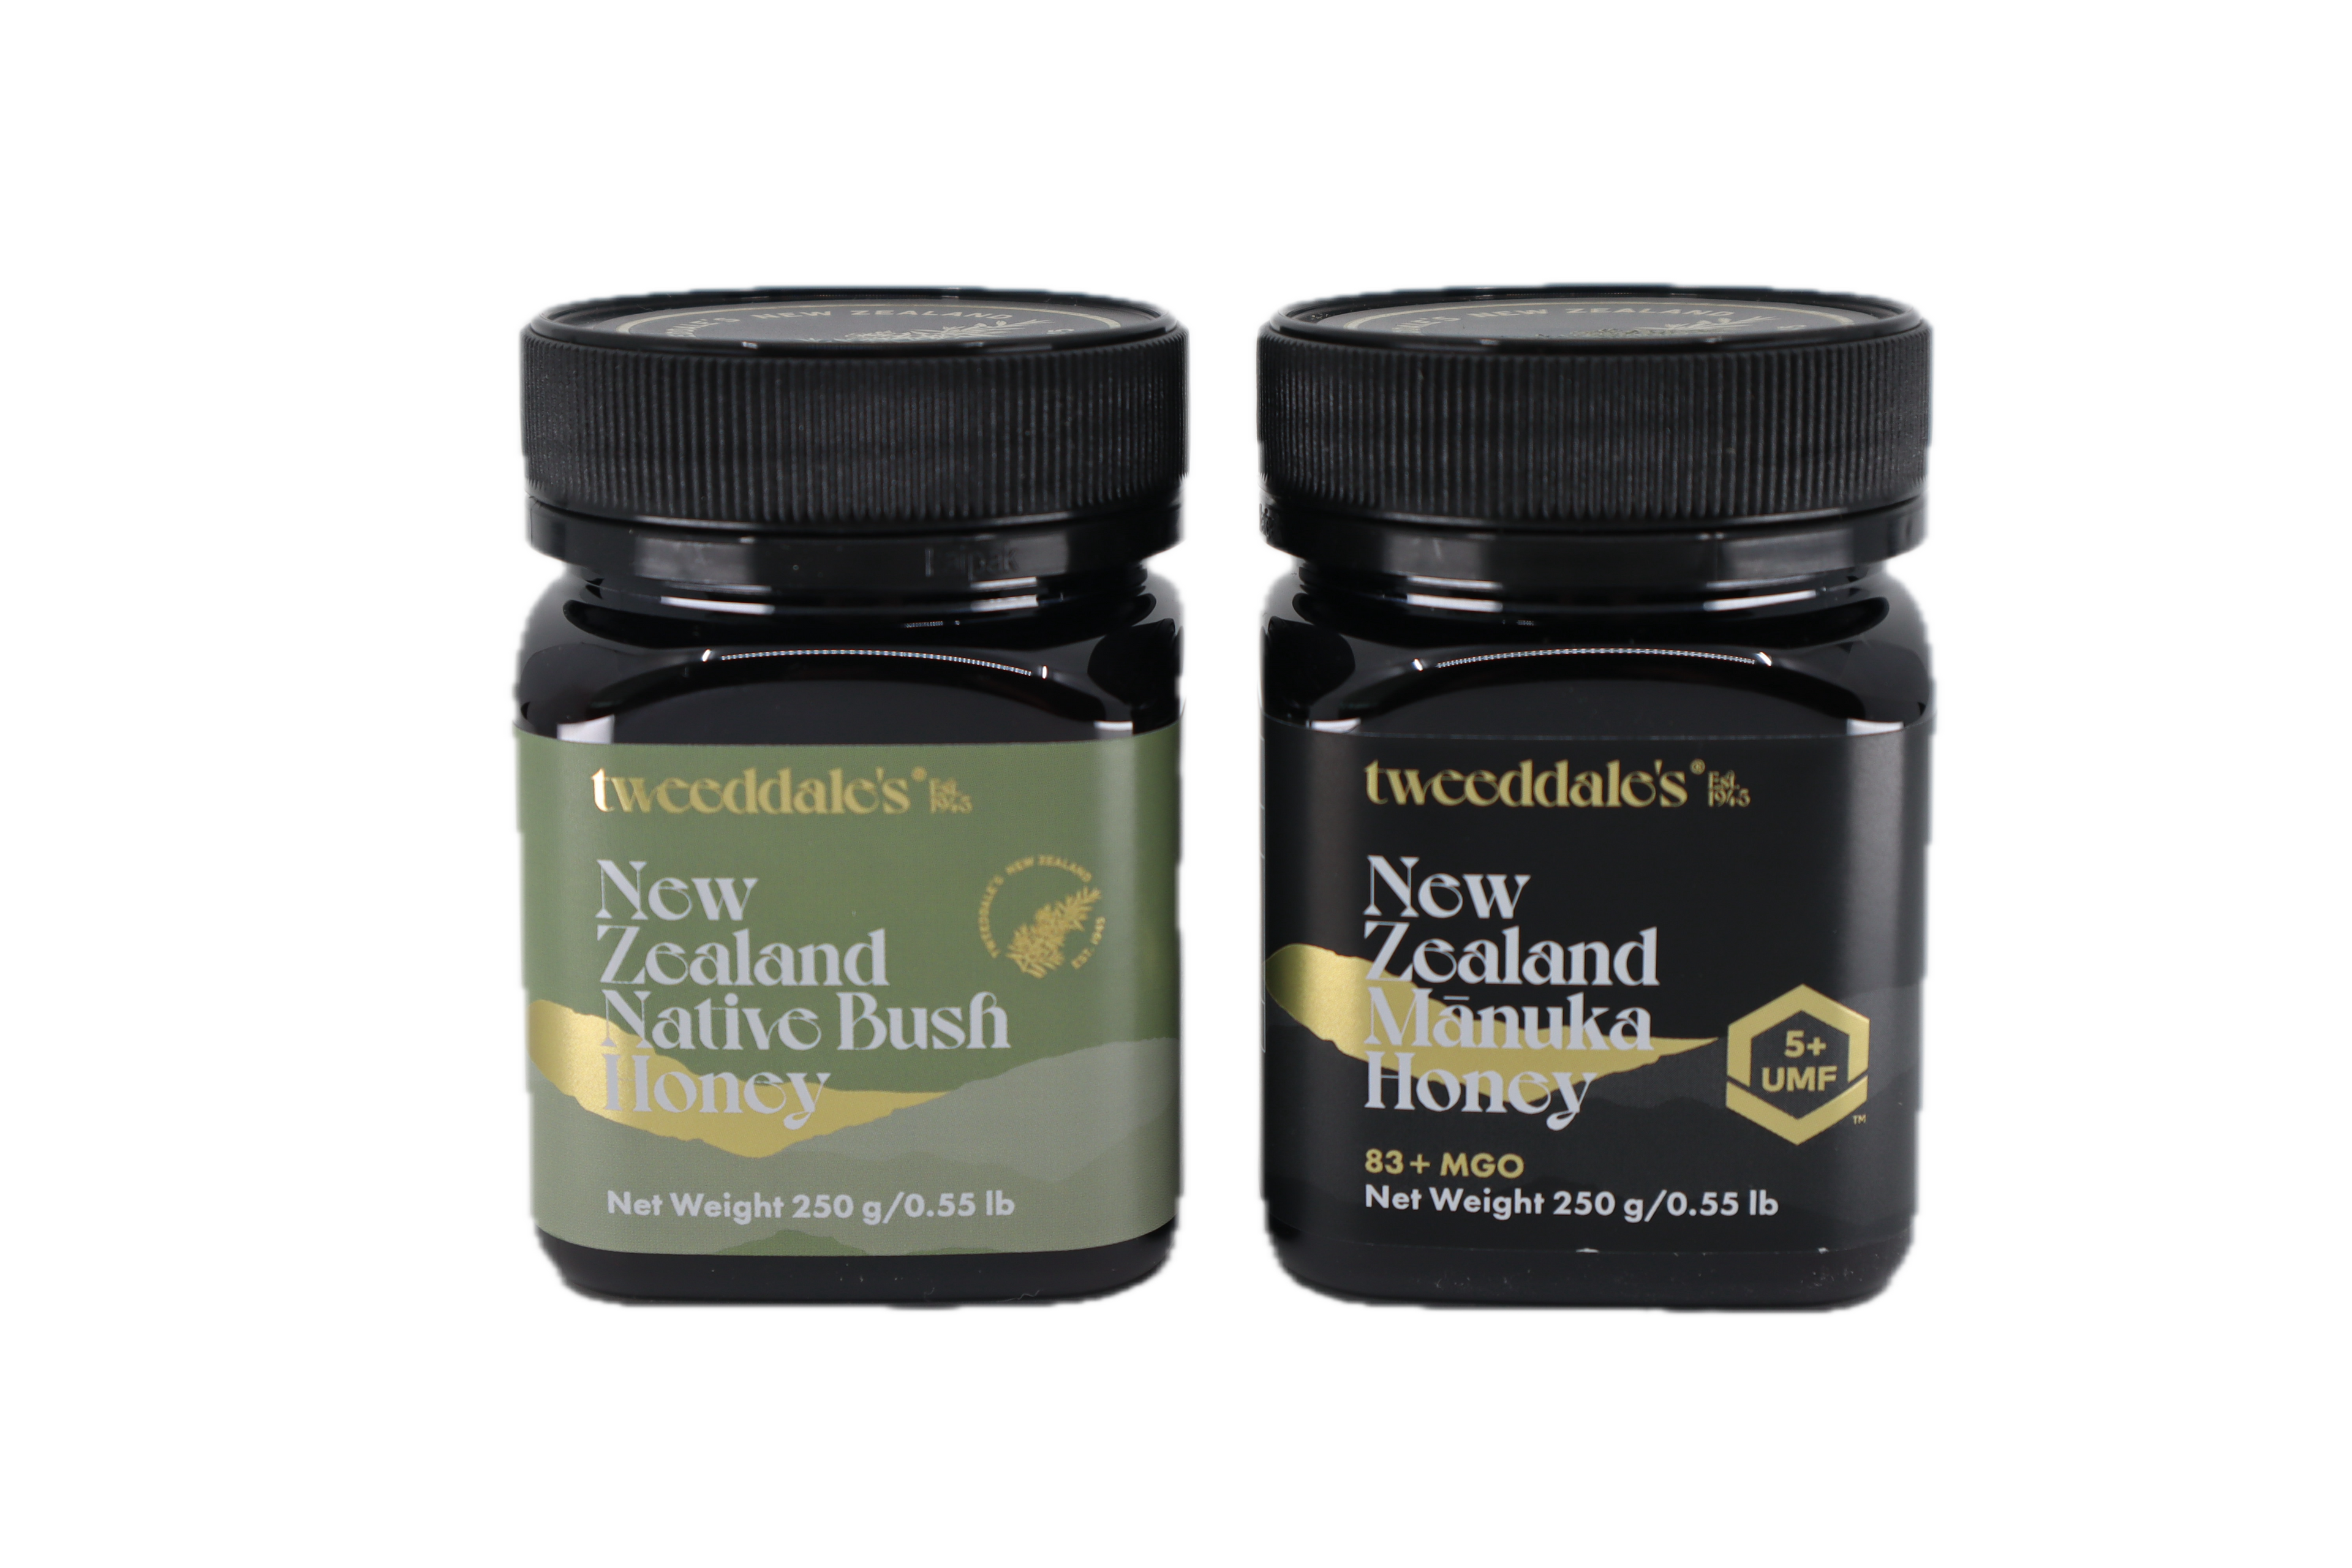 Tweeddale's Native New Zealand Honey